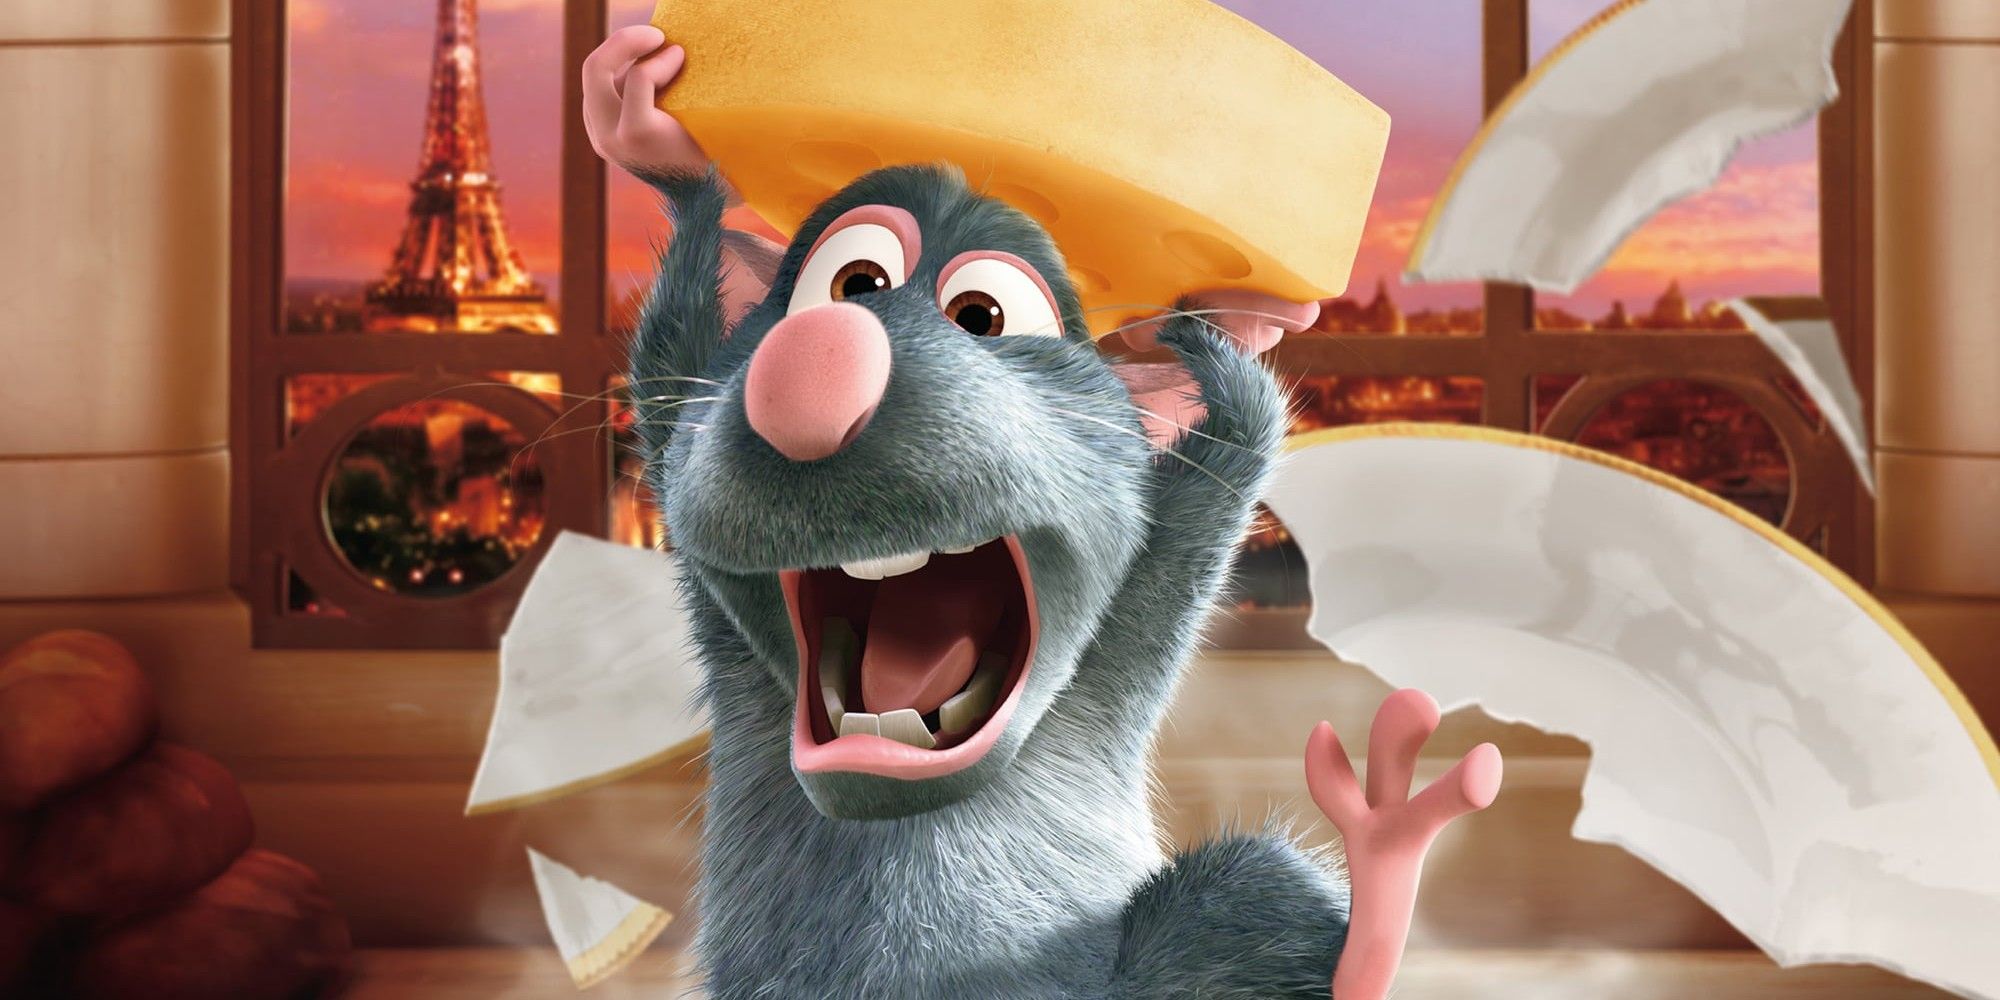 Pixar's Ratatouille Poster Art